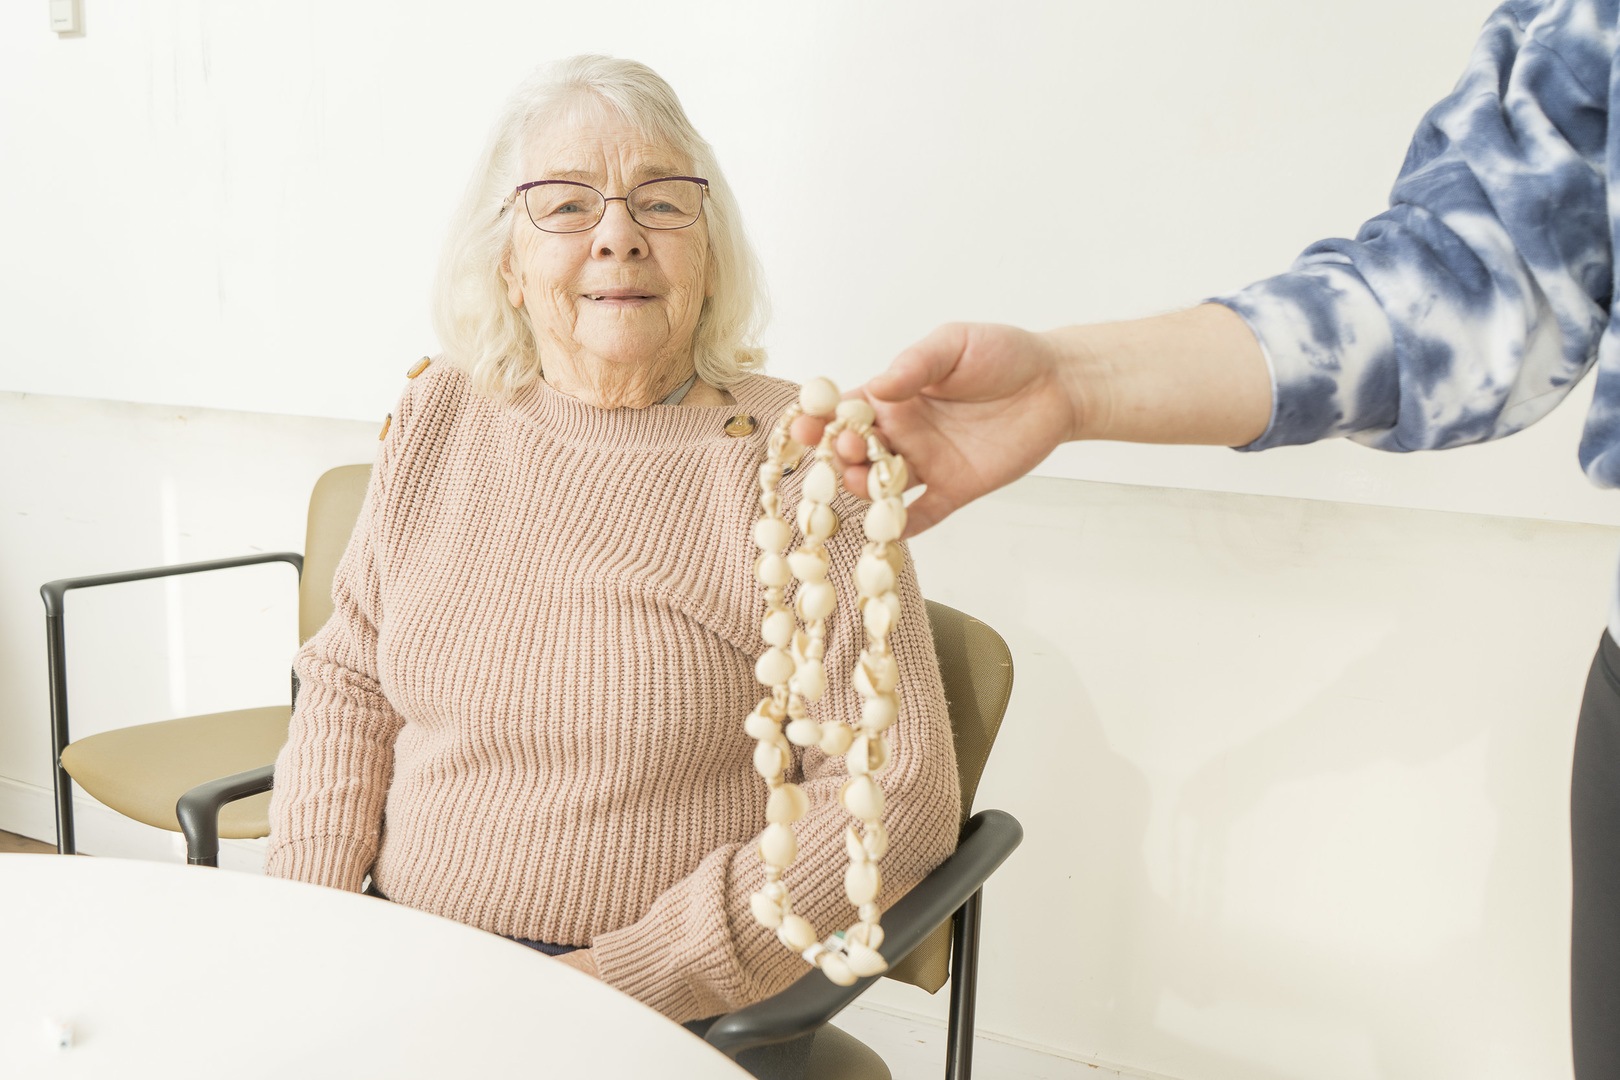 A caregiver hands a senior woman a beaded necklace